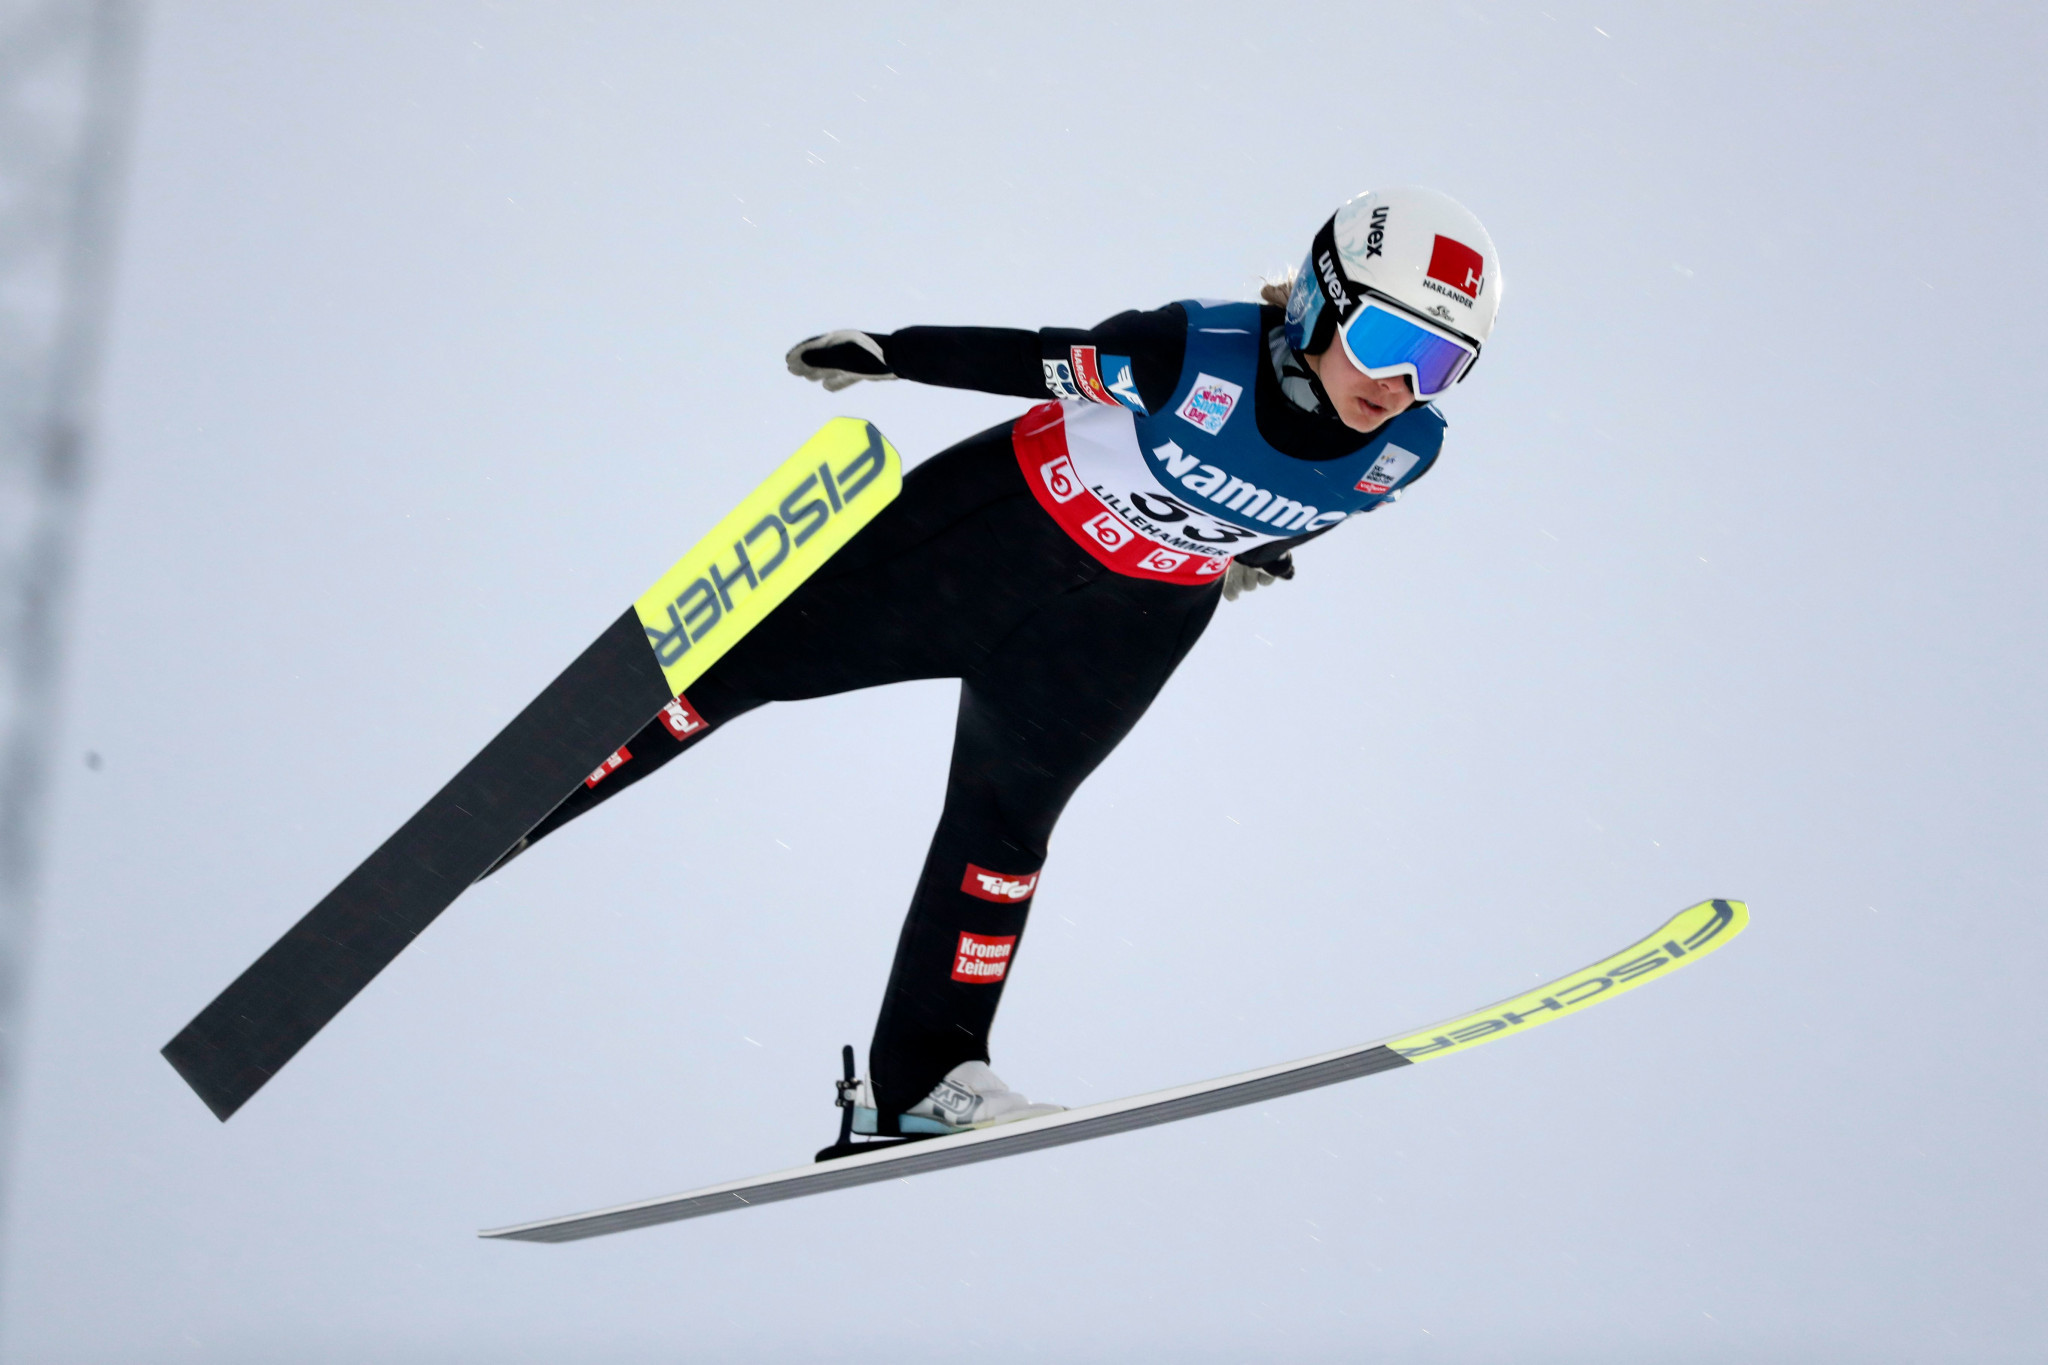 Chiara Hölzl earned an impressive victory in Oberstdorf ©Getty Images